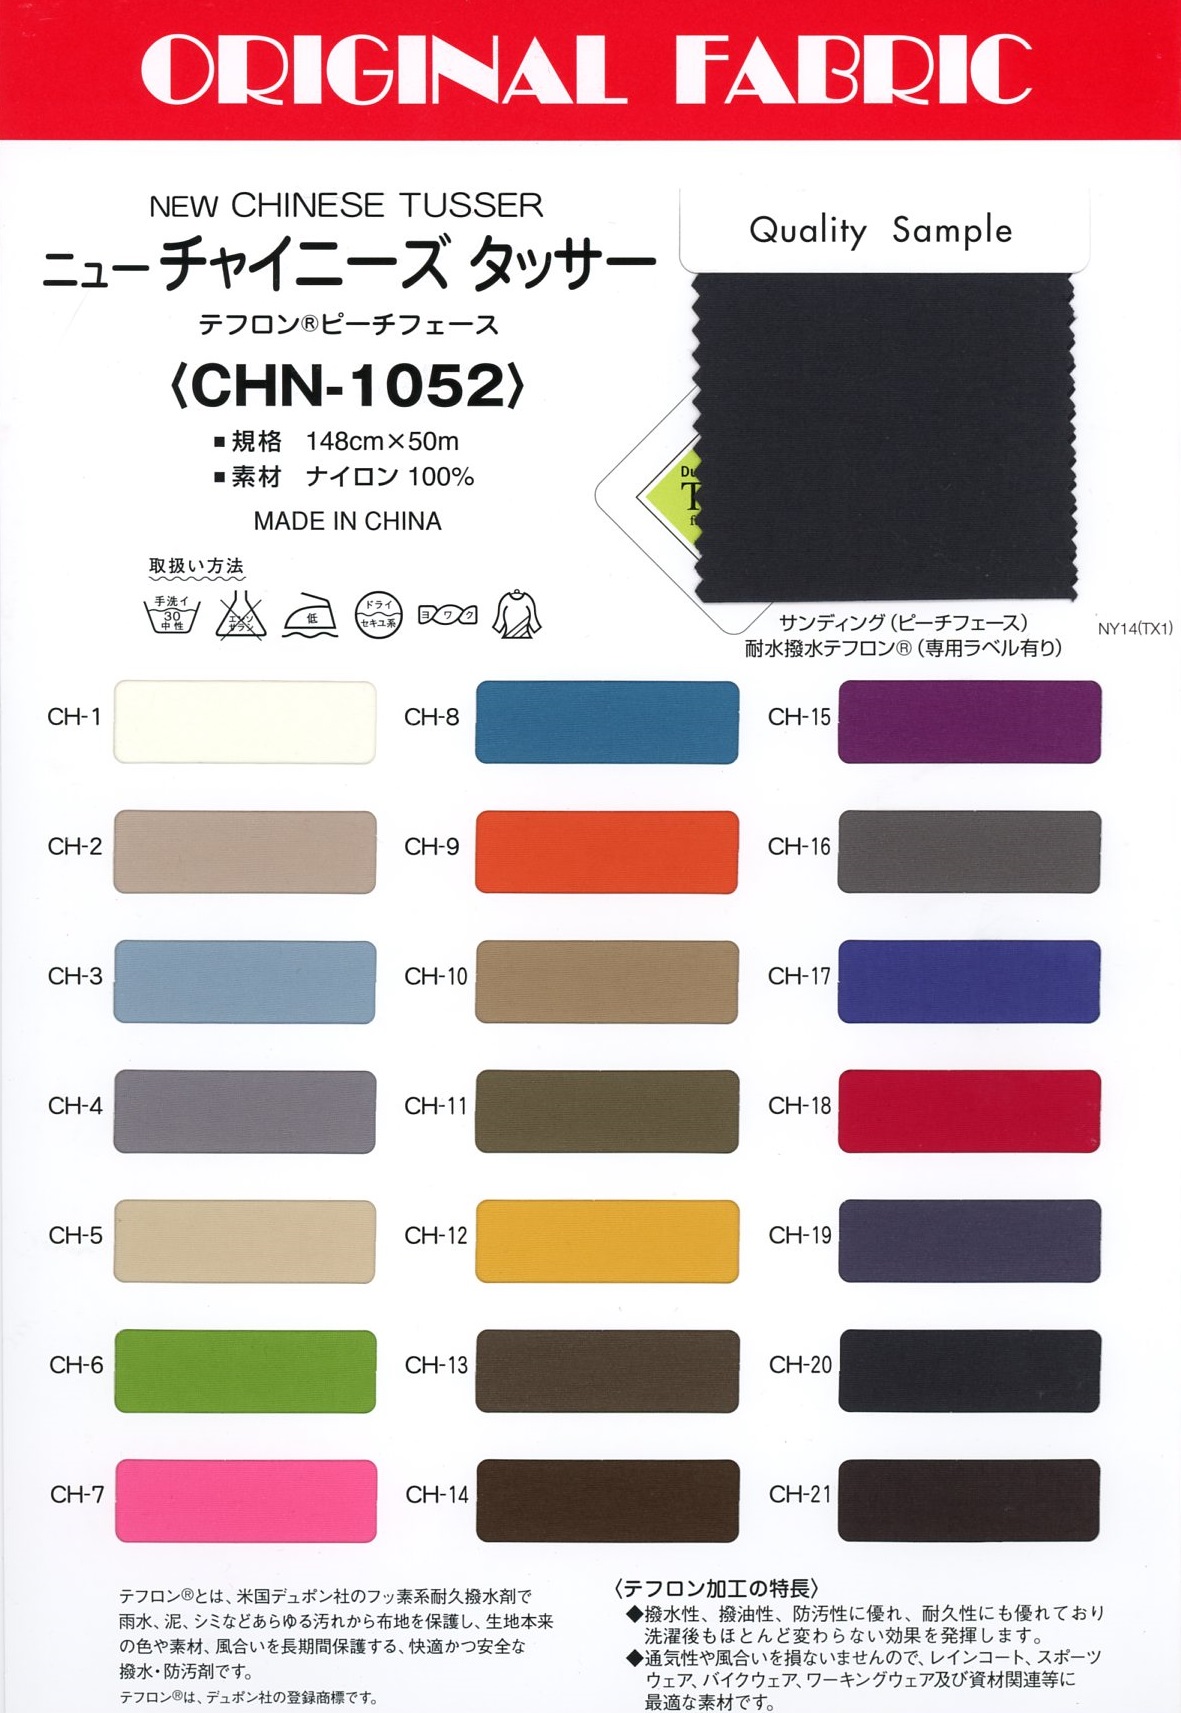 CHN-1052 New Chinese Tussar[Textile / Fabric] Masuda